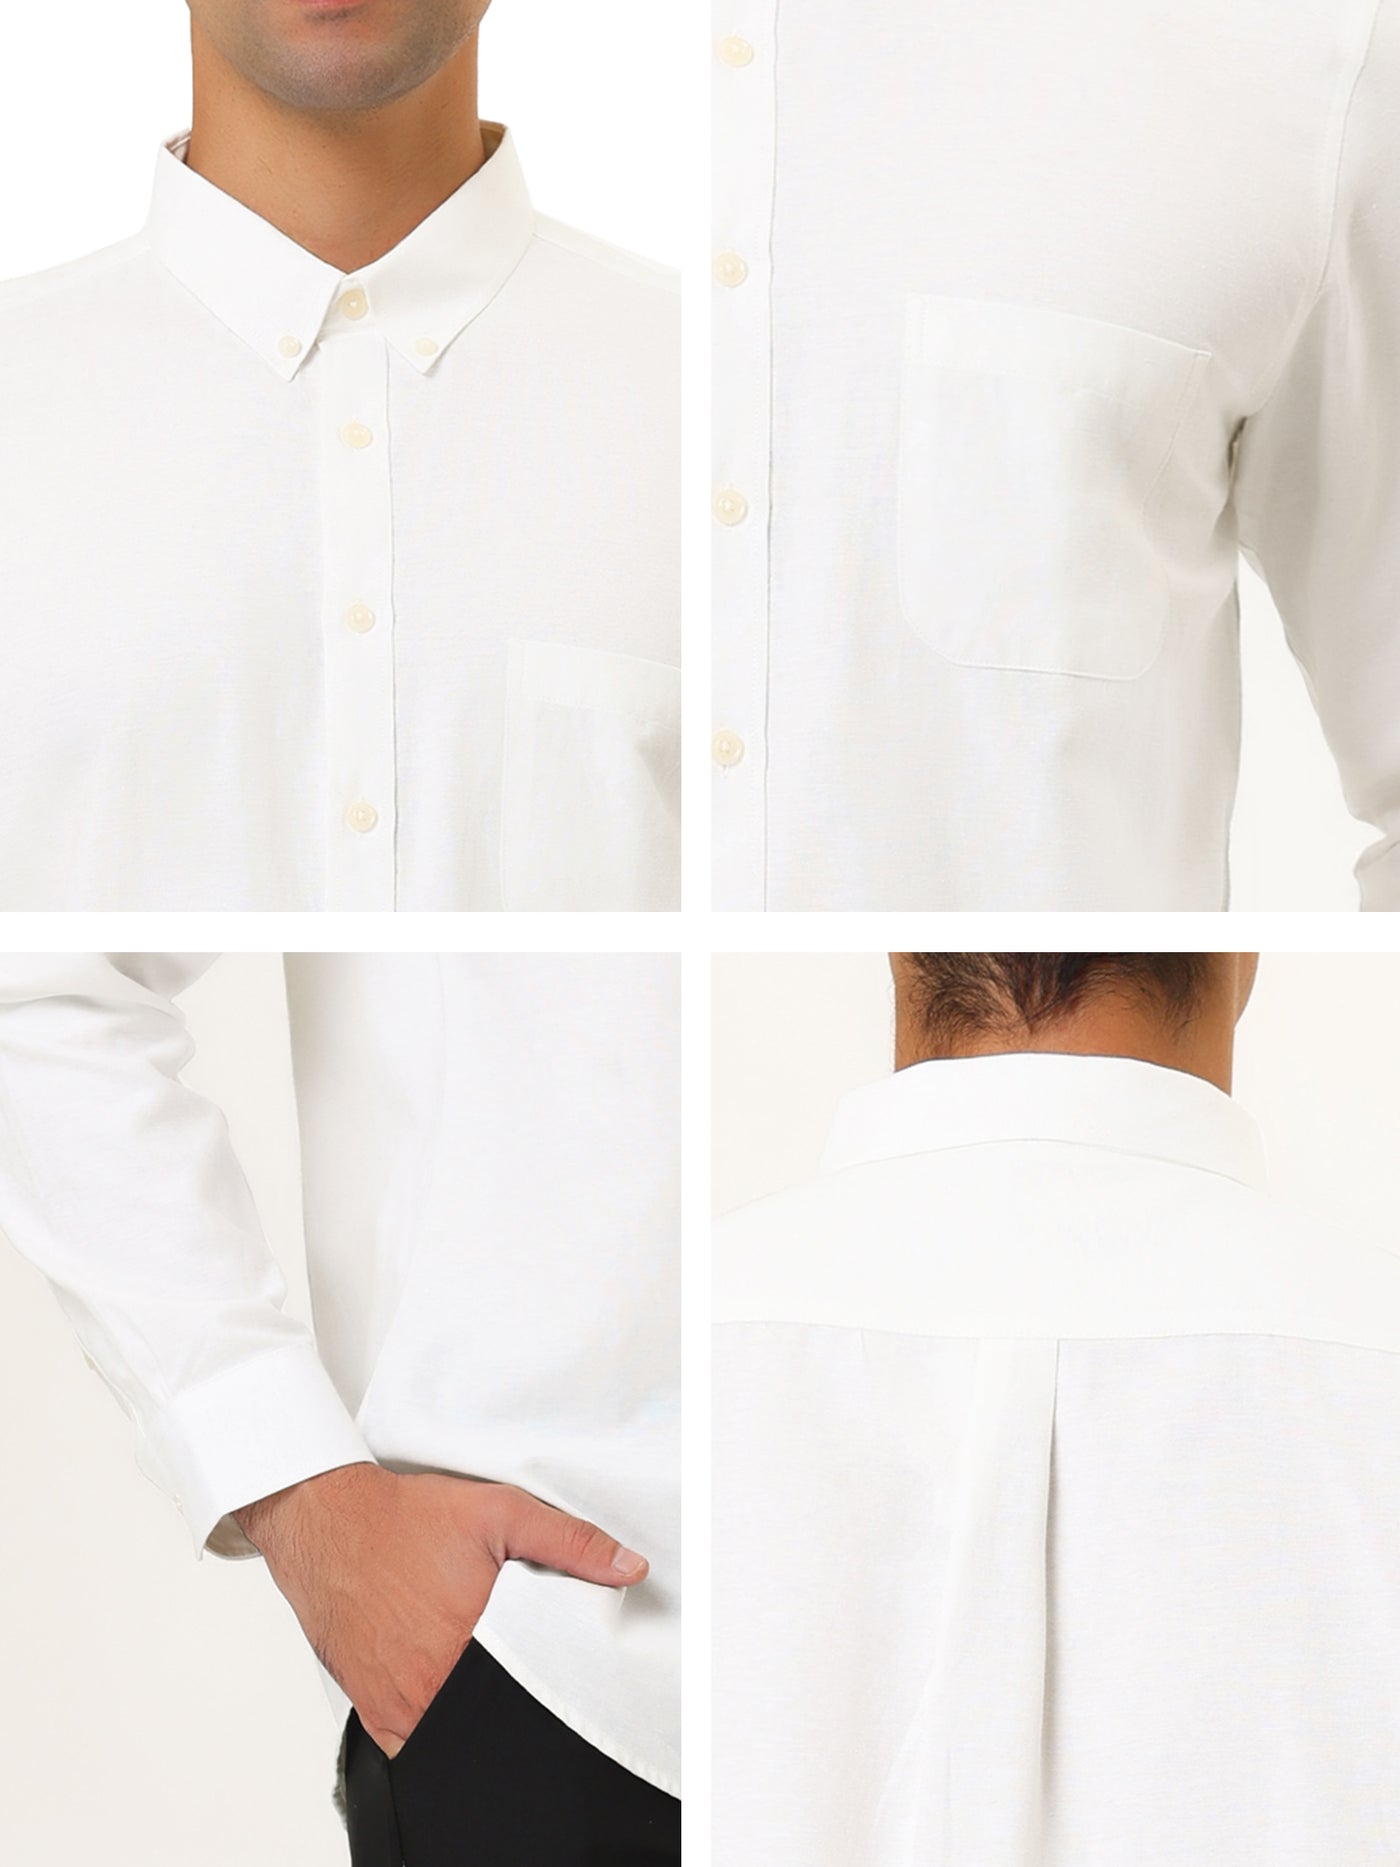 Bublédon Classic Long Sleeve Solid Color Button Dress Shirt